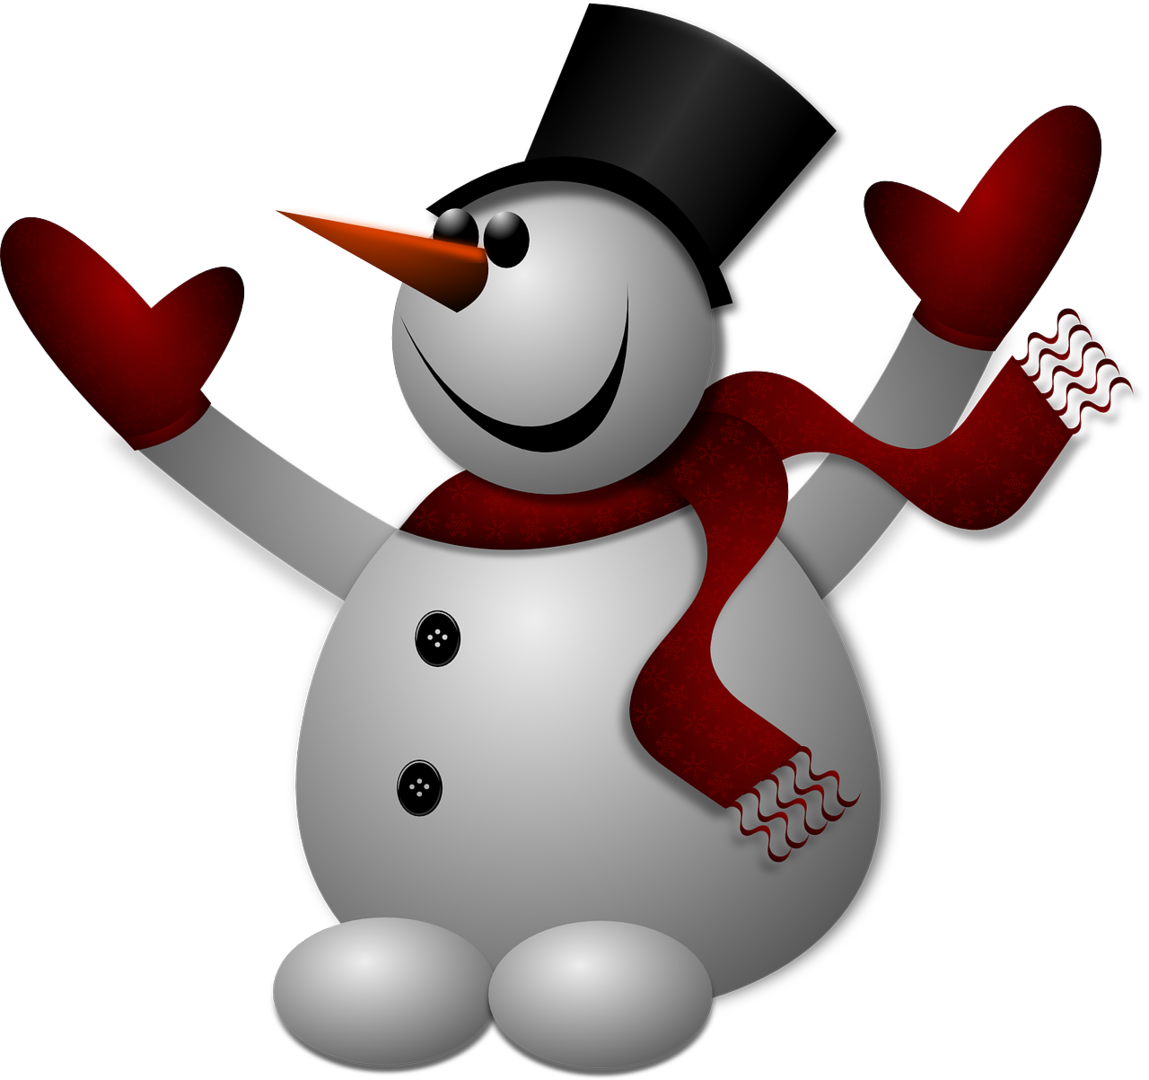 snowman-160881_1280.png